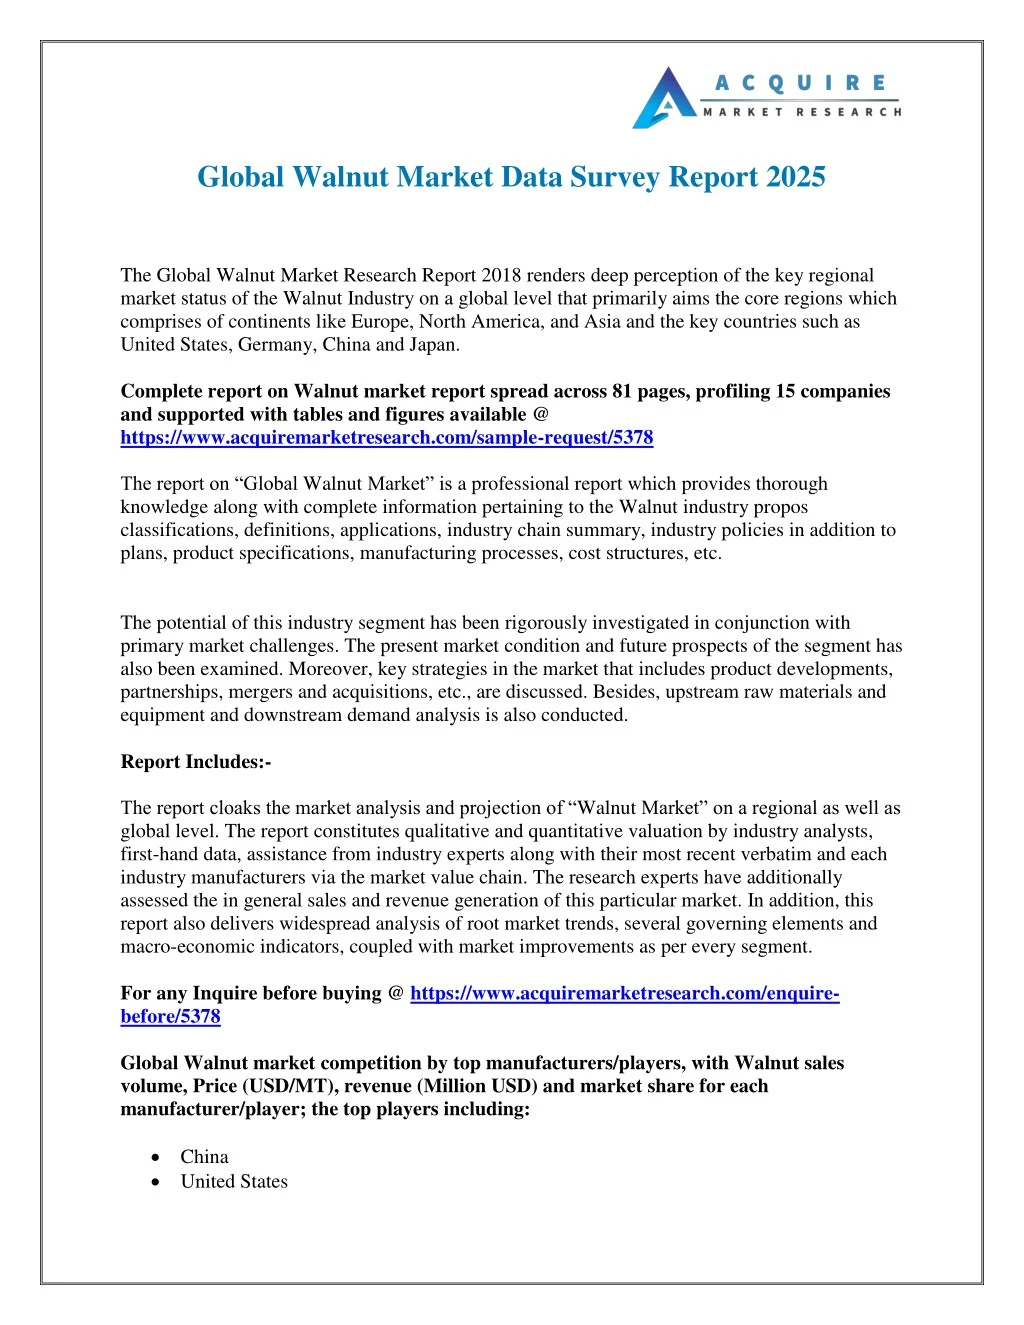 global walnut market data survey report 2025